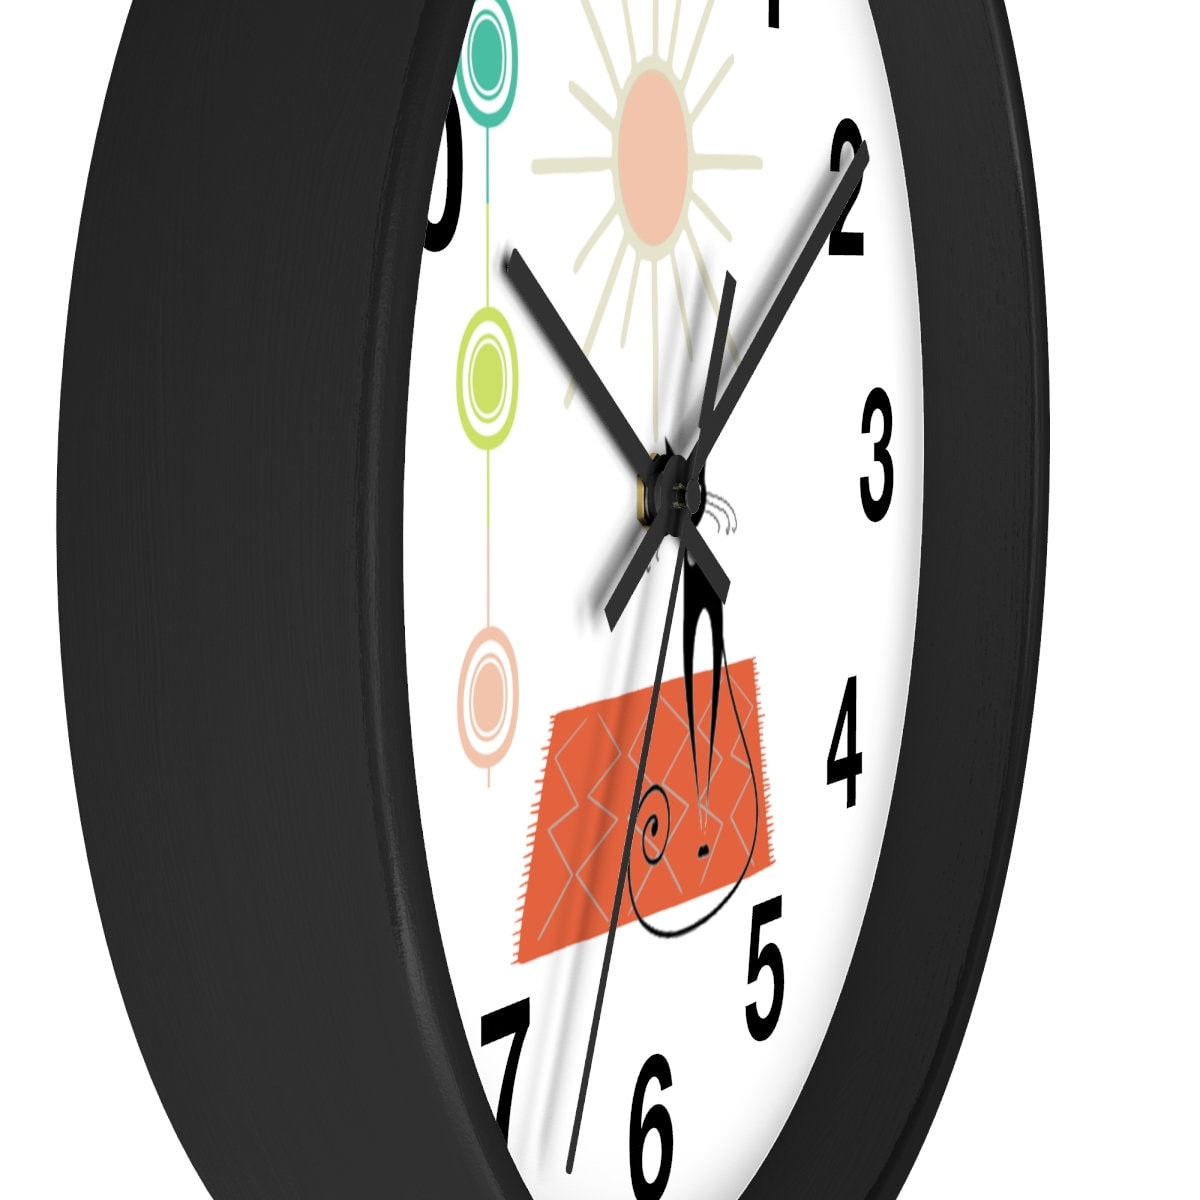 Atomic Wall Clock, Retro Kitchen Clock, Black Cat Clock